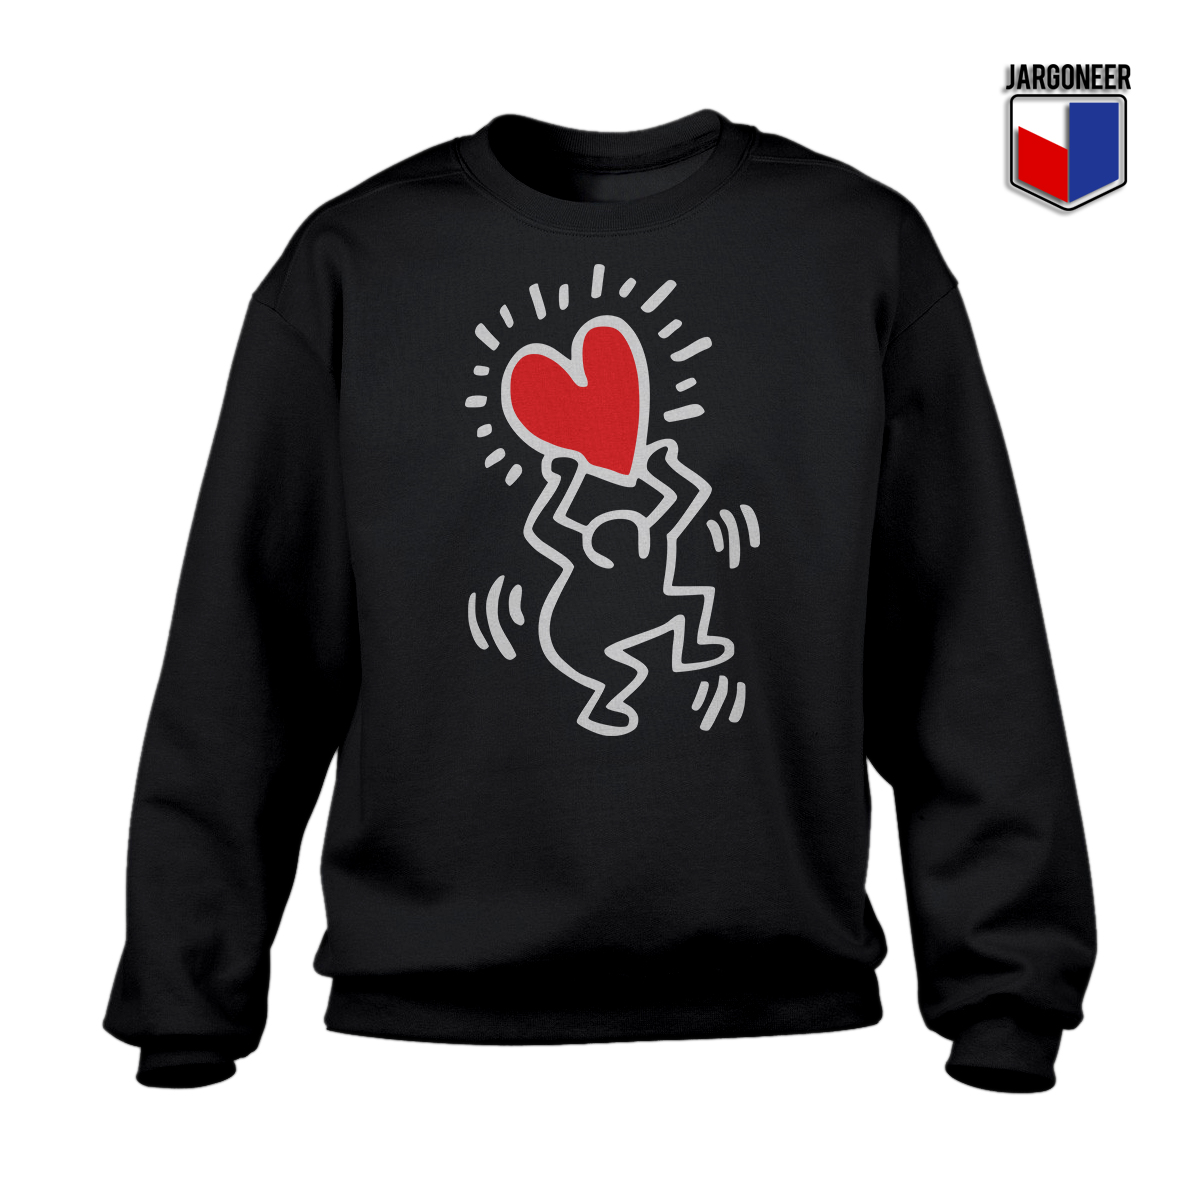 Haring Heart Black SS - Shop Unique Graphic Cool Shirt Designs